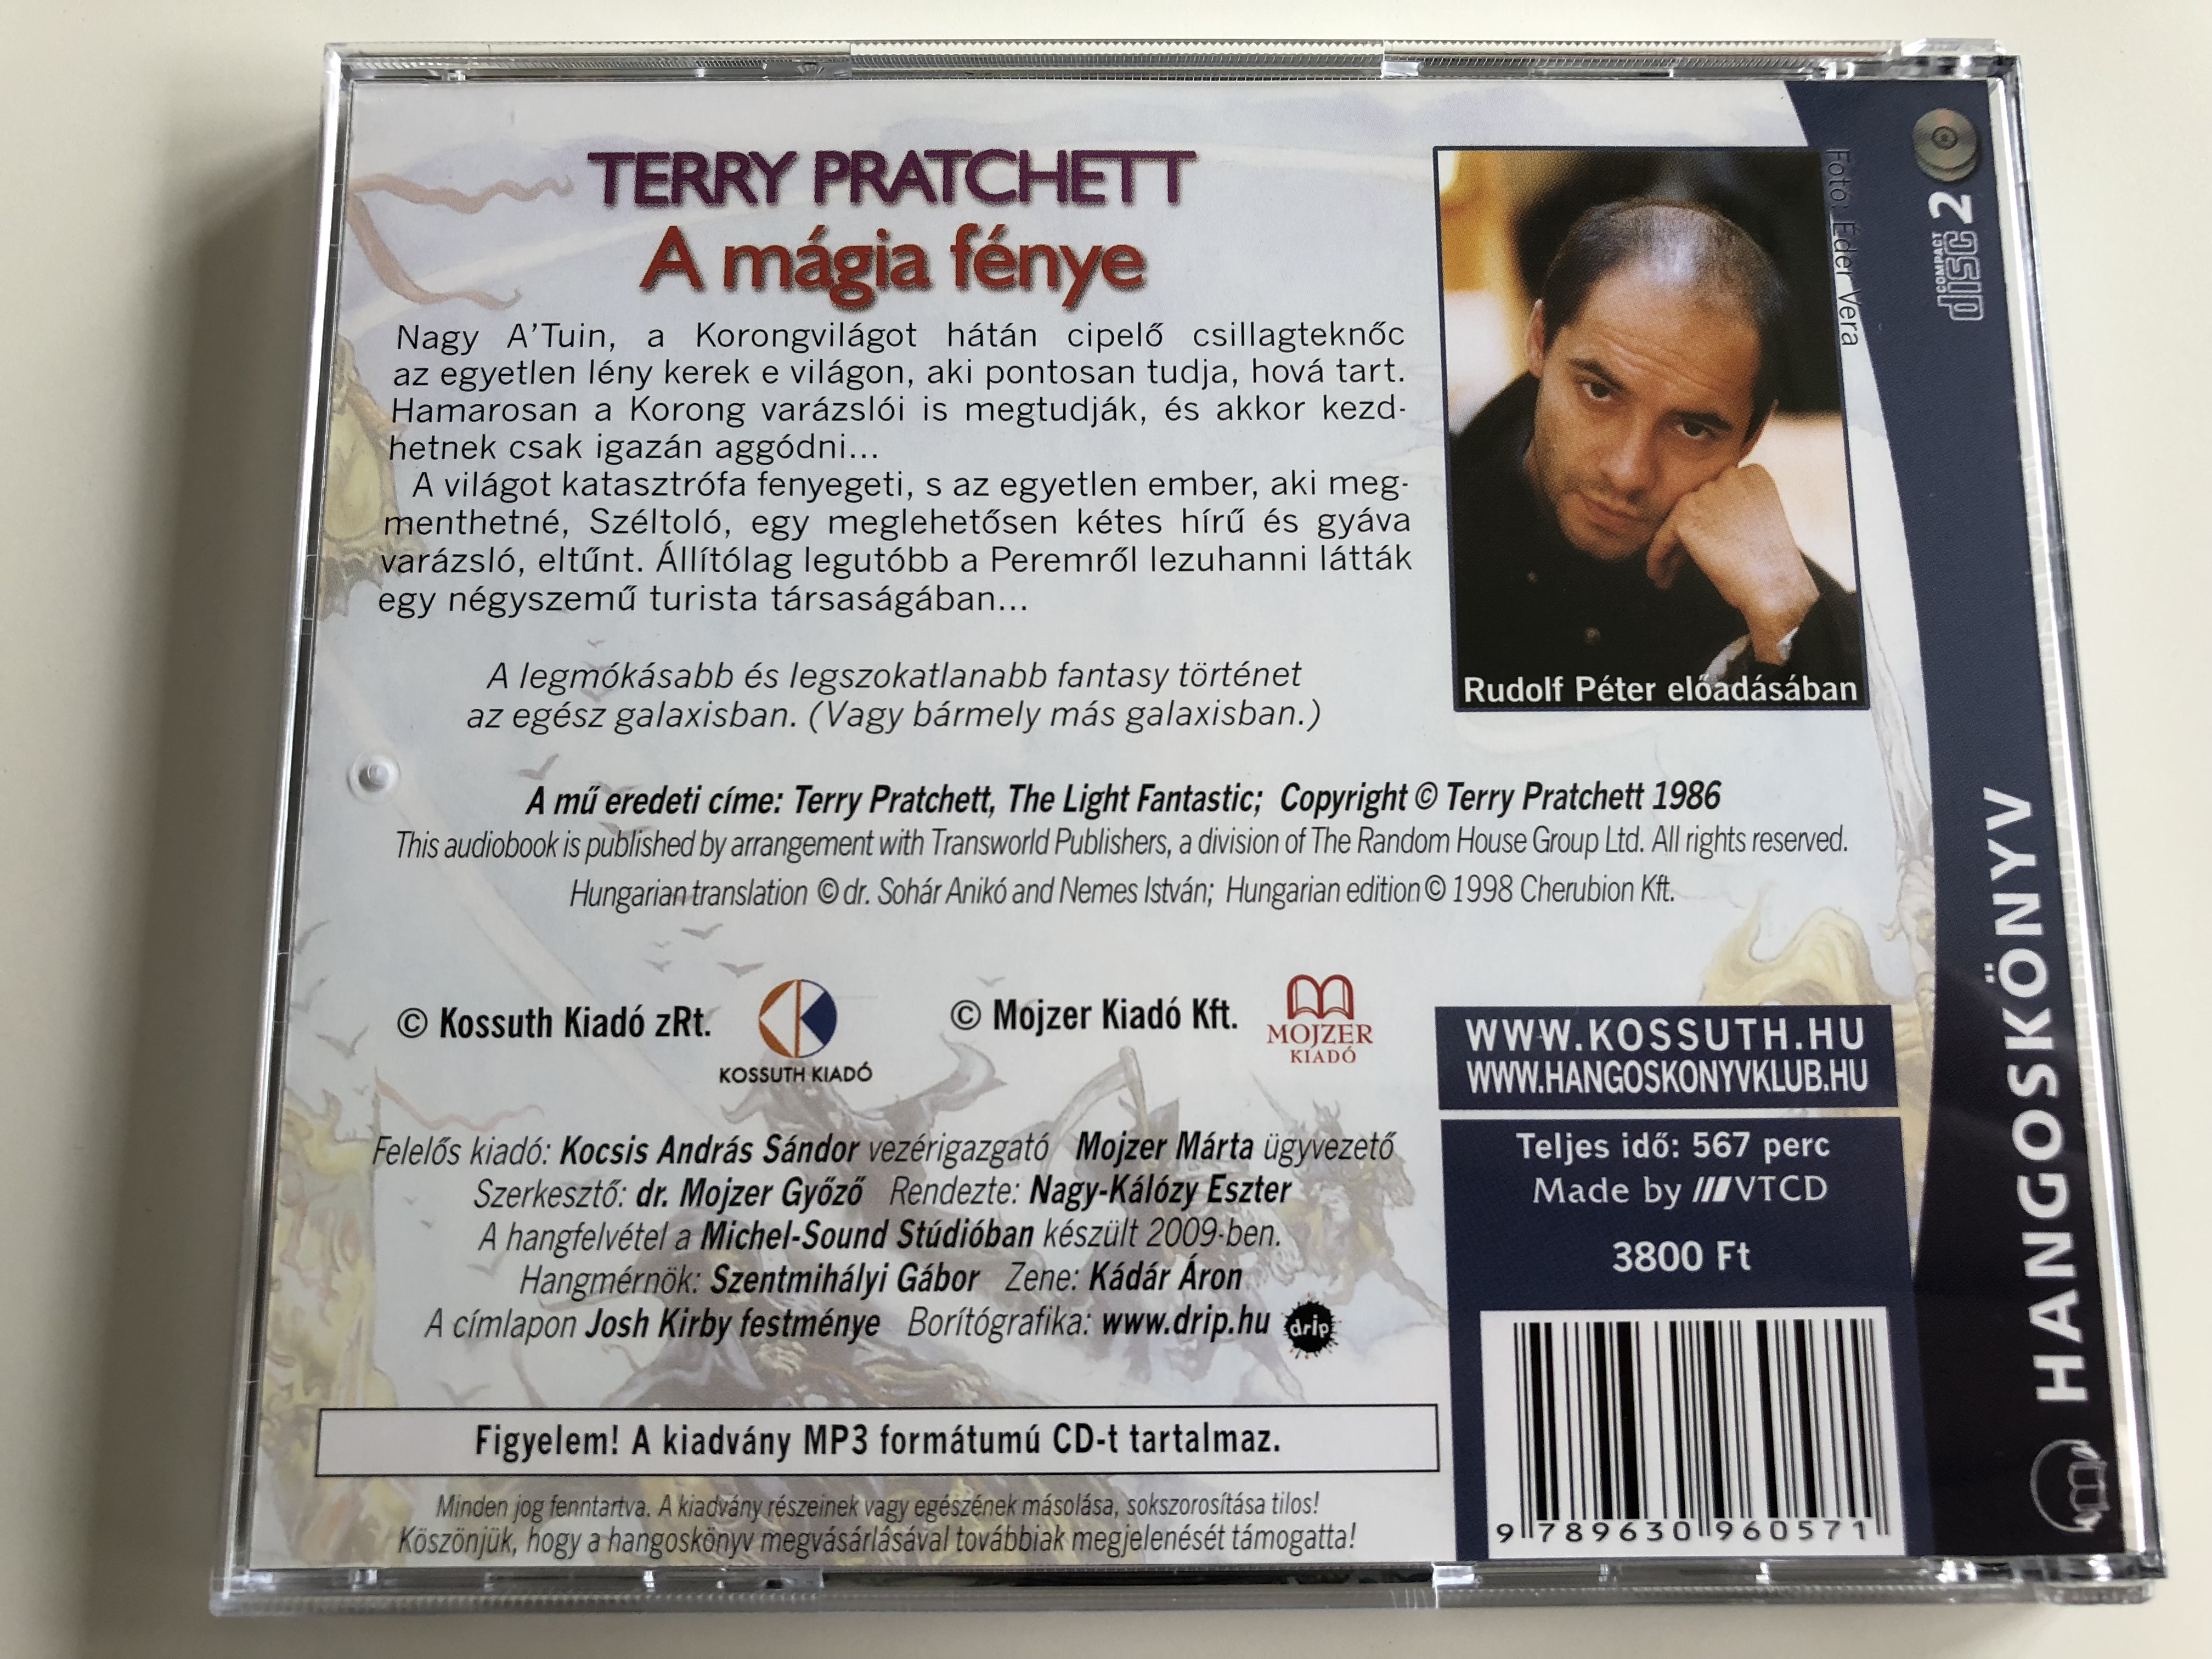 terry-pratchett-a-m-gia-f-nye-a-m-sodik-korongvil-g-reg-ny-read-by-rudolf-p-ter-hungarian-audio-book-edition-of-the-light-fantastic-by-terry-pratchett-mp3-audio-cd-2009-kossuth-mojzer-kiad-4-.jpg